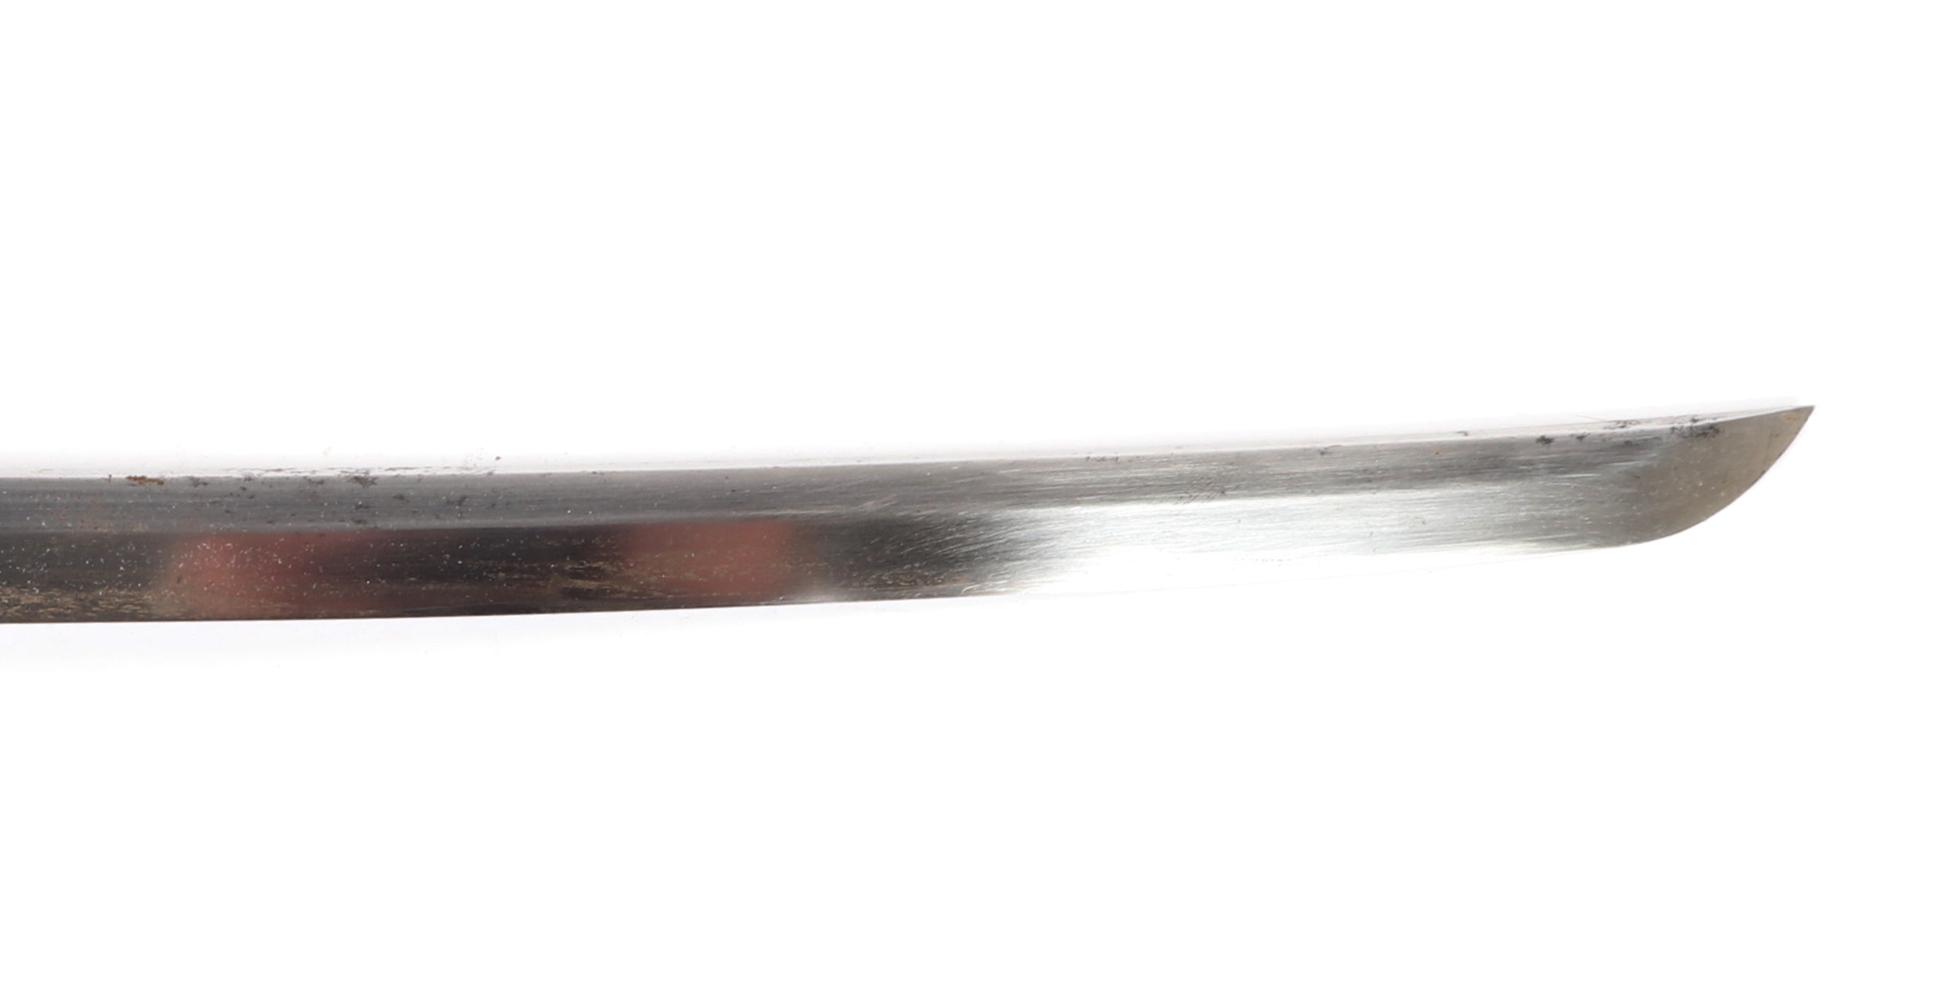 Antique Japanese Sword w/ Scabbard